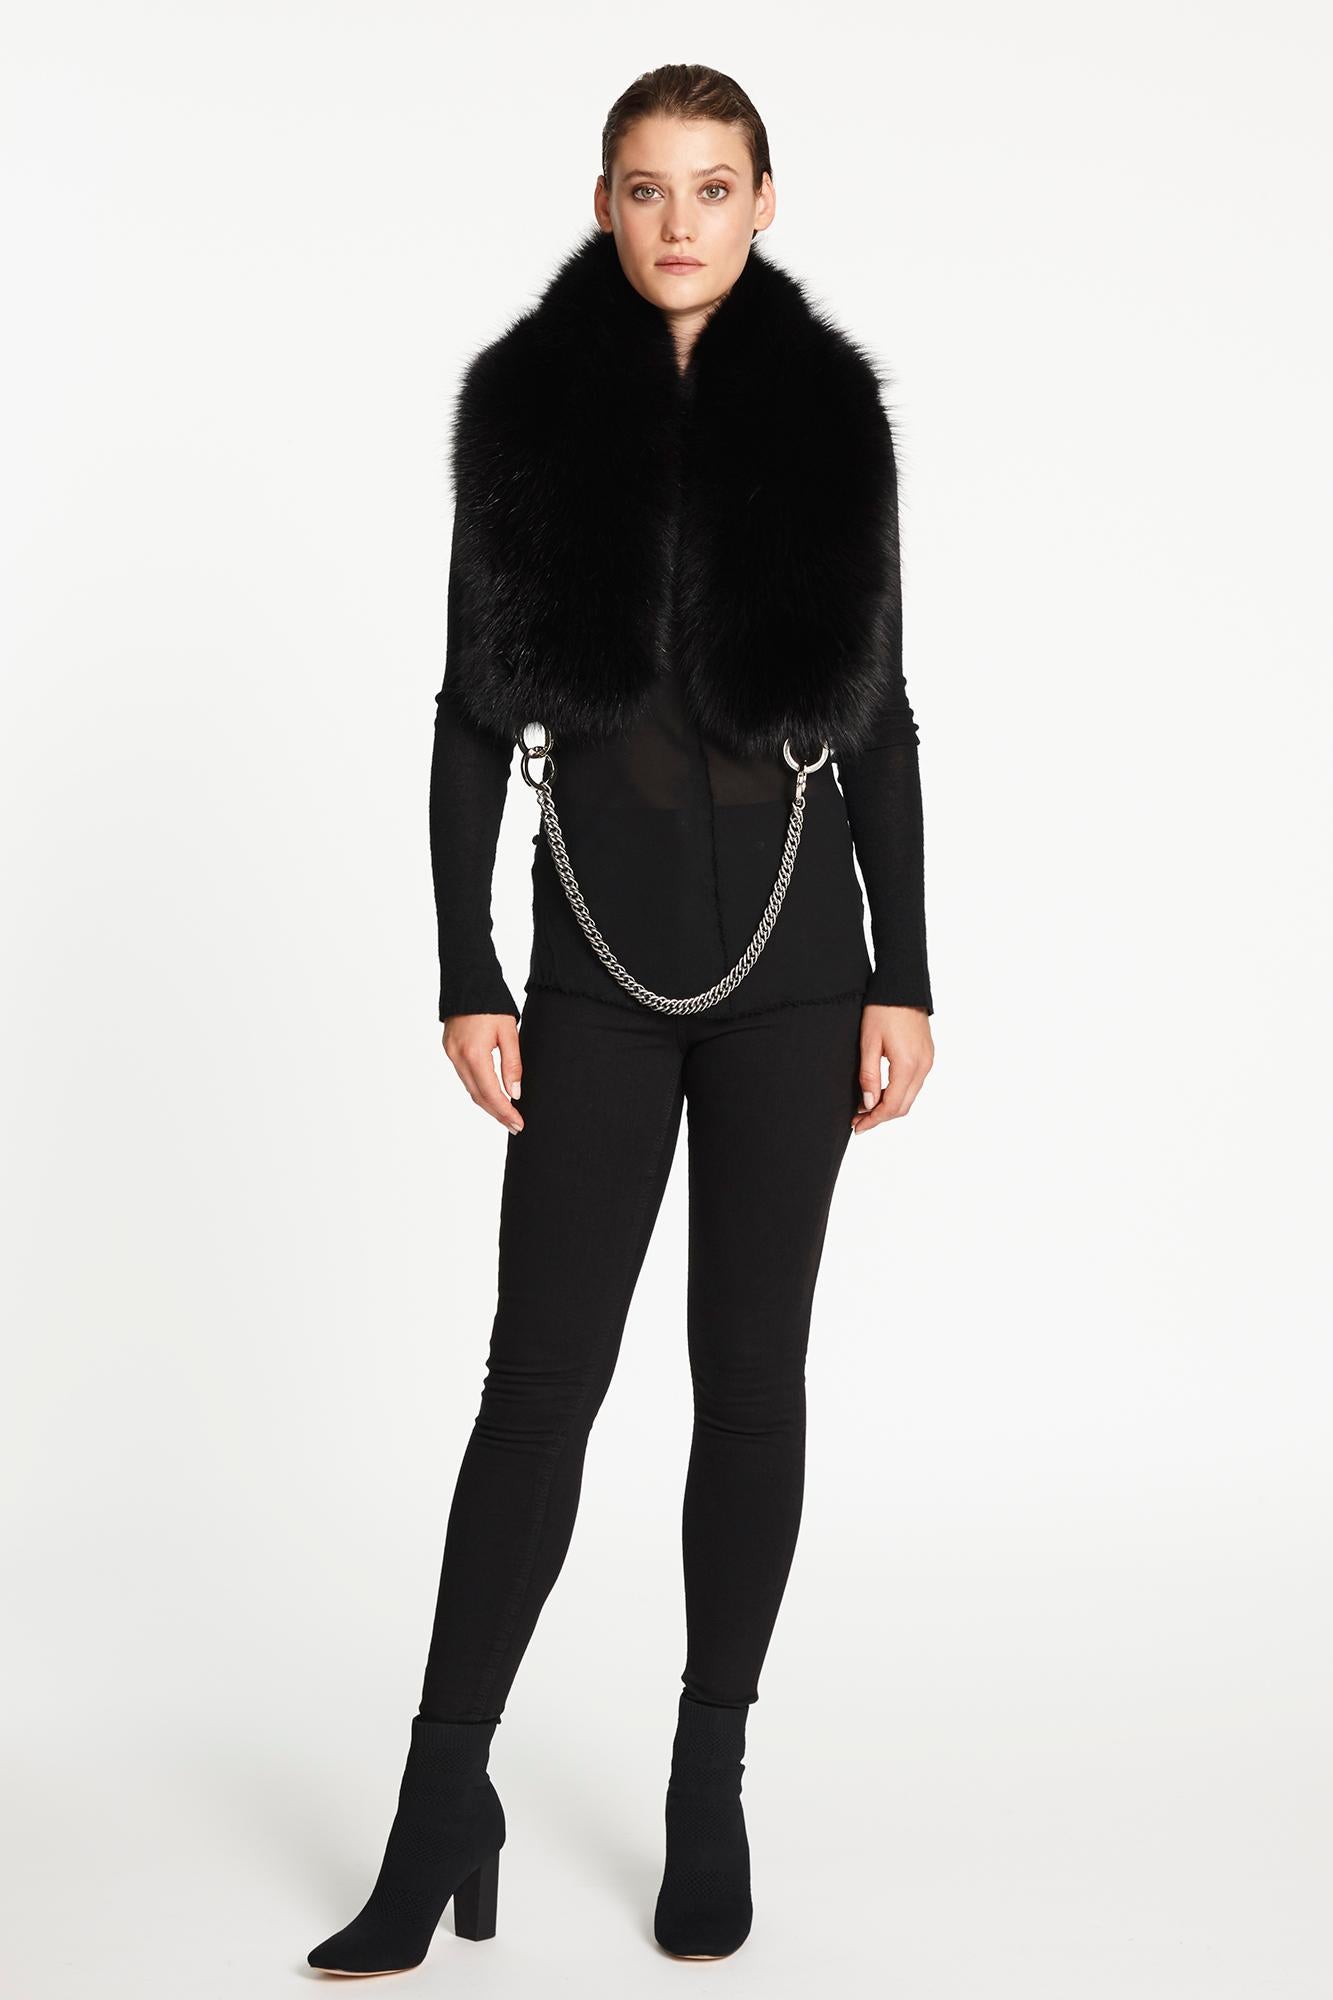 Verheyen London Chained Stole in Black Fox Fur & Silk Lining with Chain 1